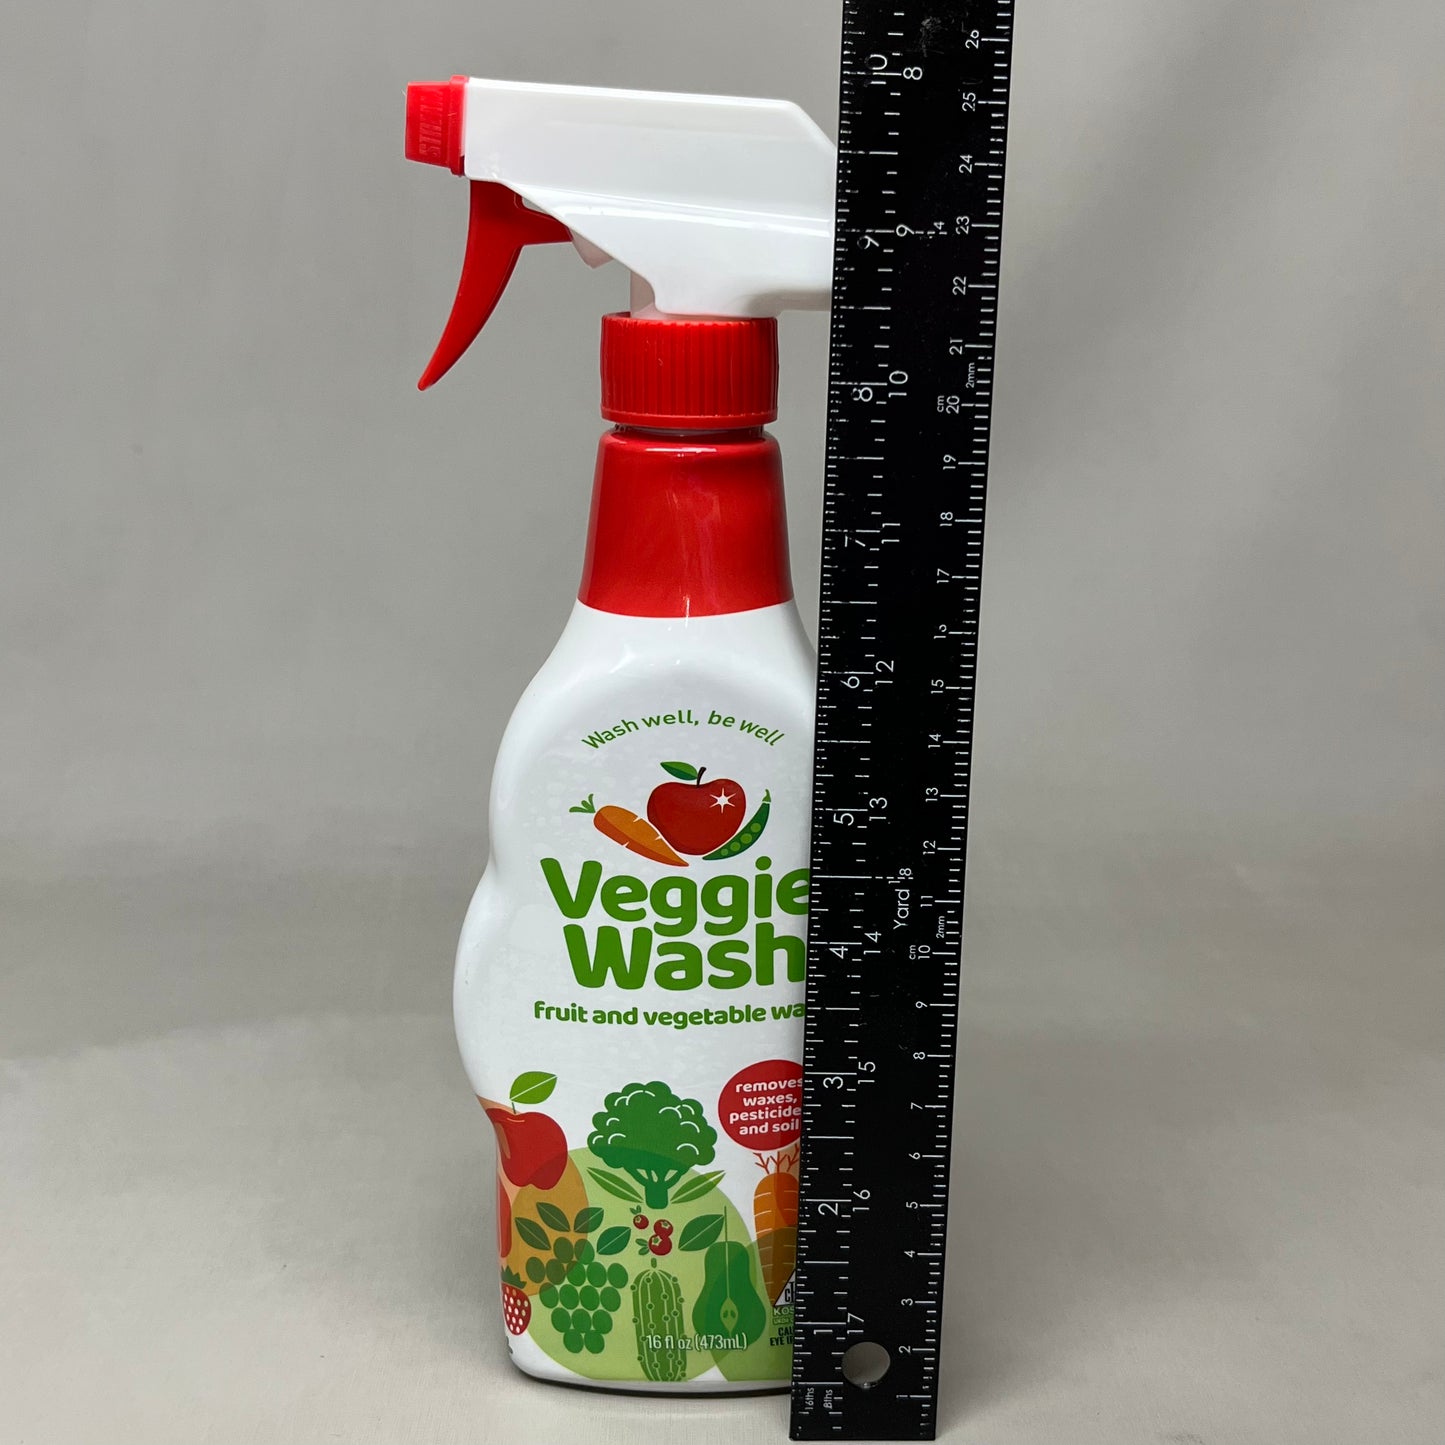 VEGGIE WASH 2-PACK! Fruit and Vegetable Produce Wash Soap 16 fl oz. E R81111 (New)